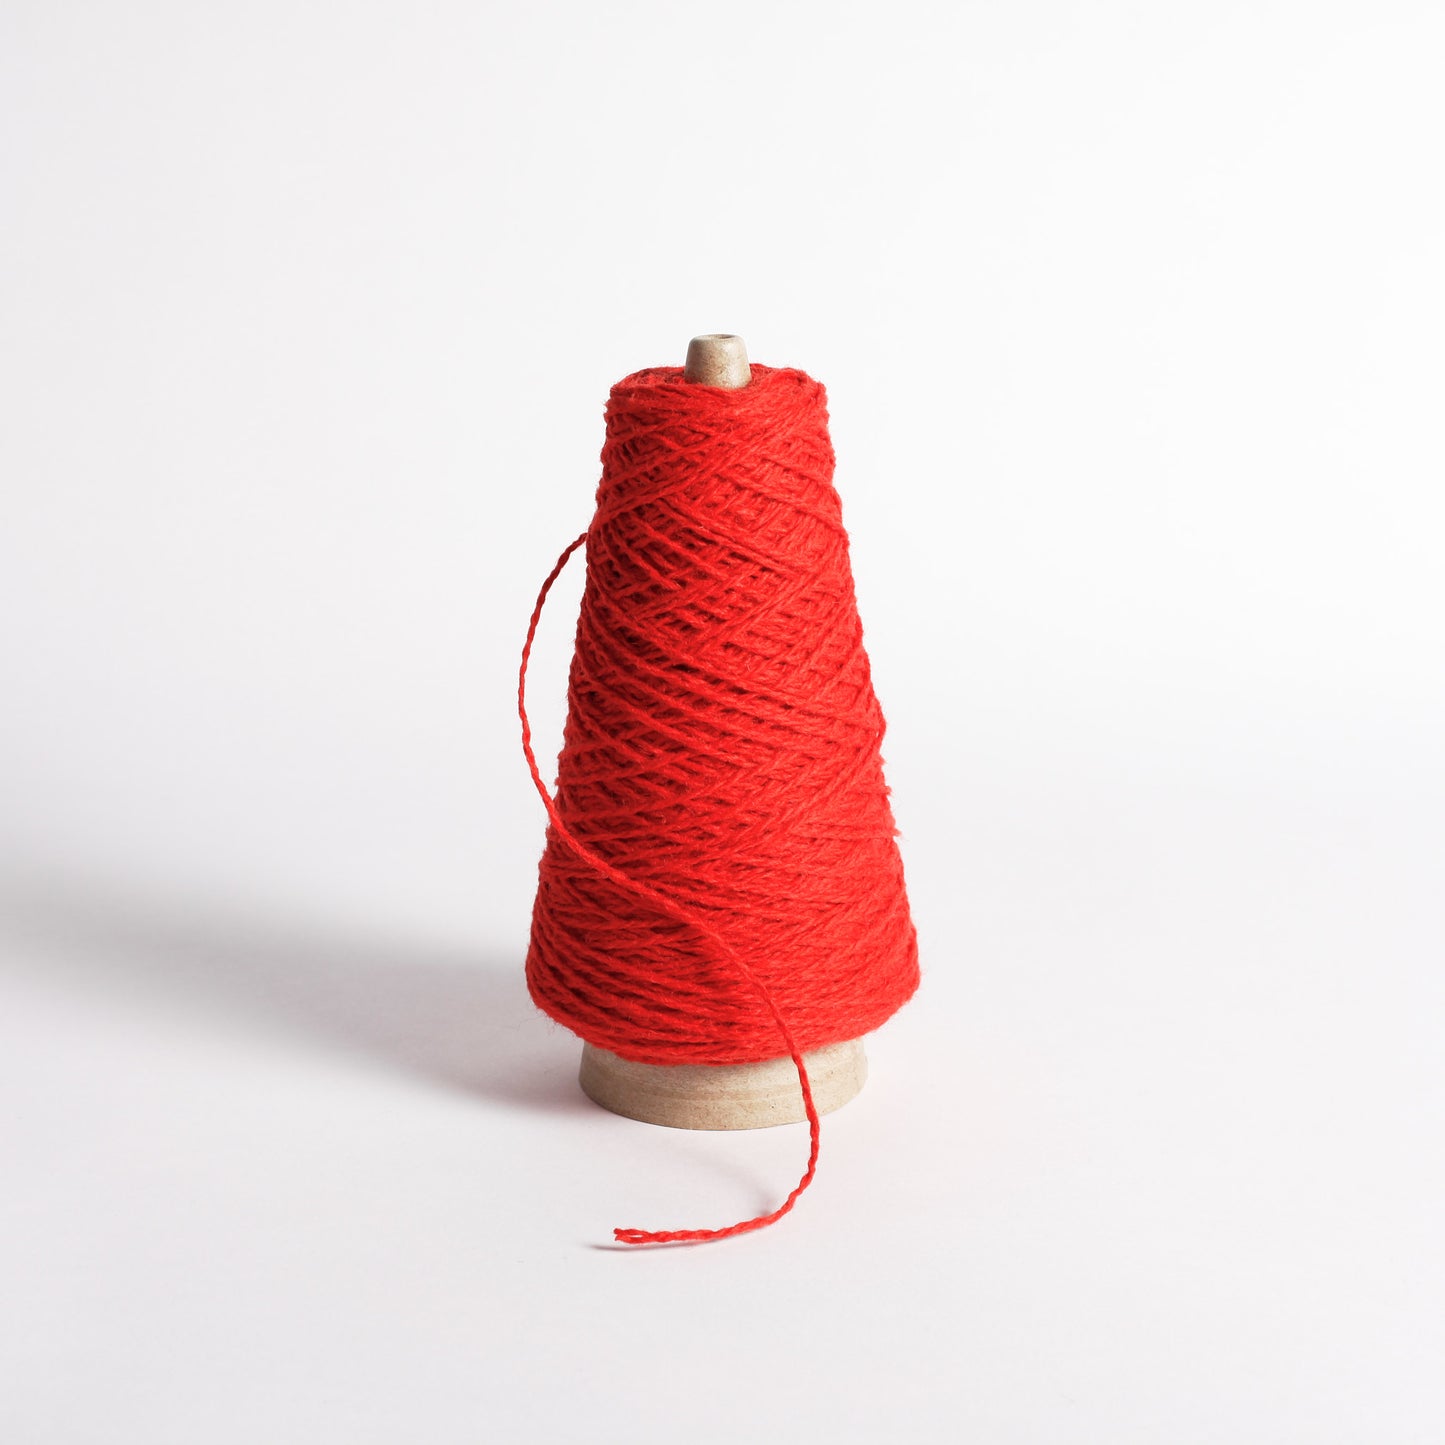 100% Wool - 2/6 YSW - Red